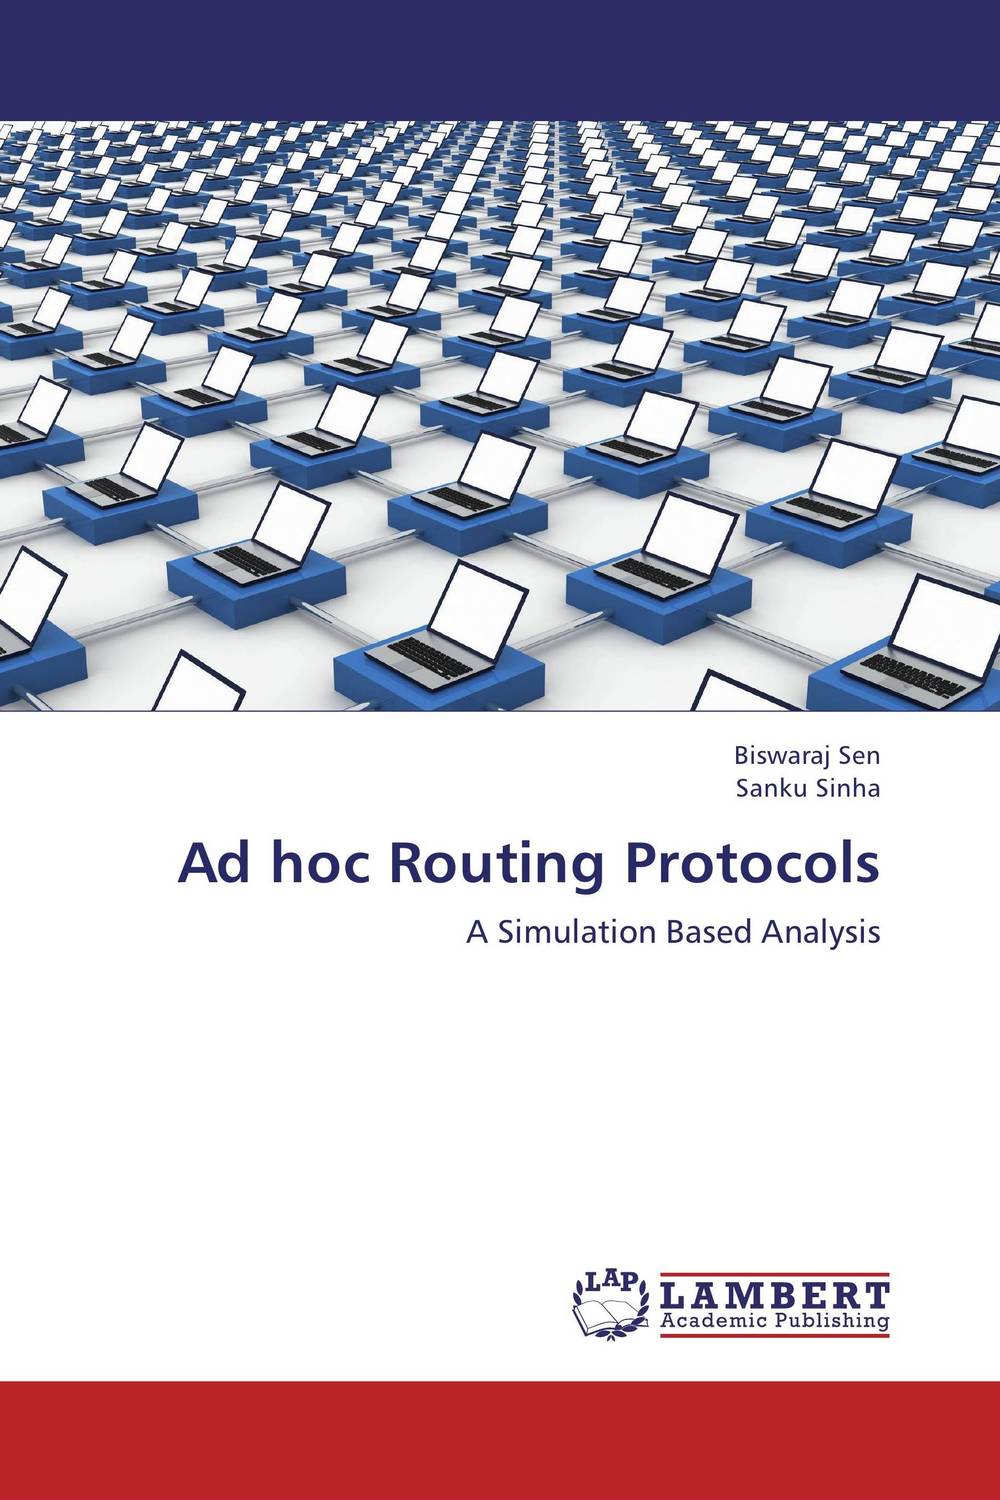 Ad hoc Routing Protocols